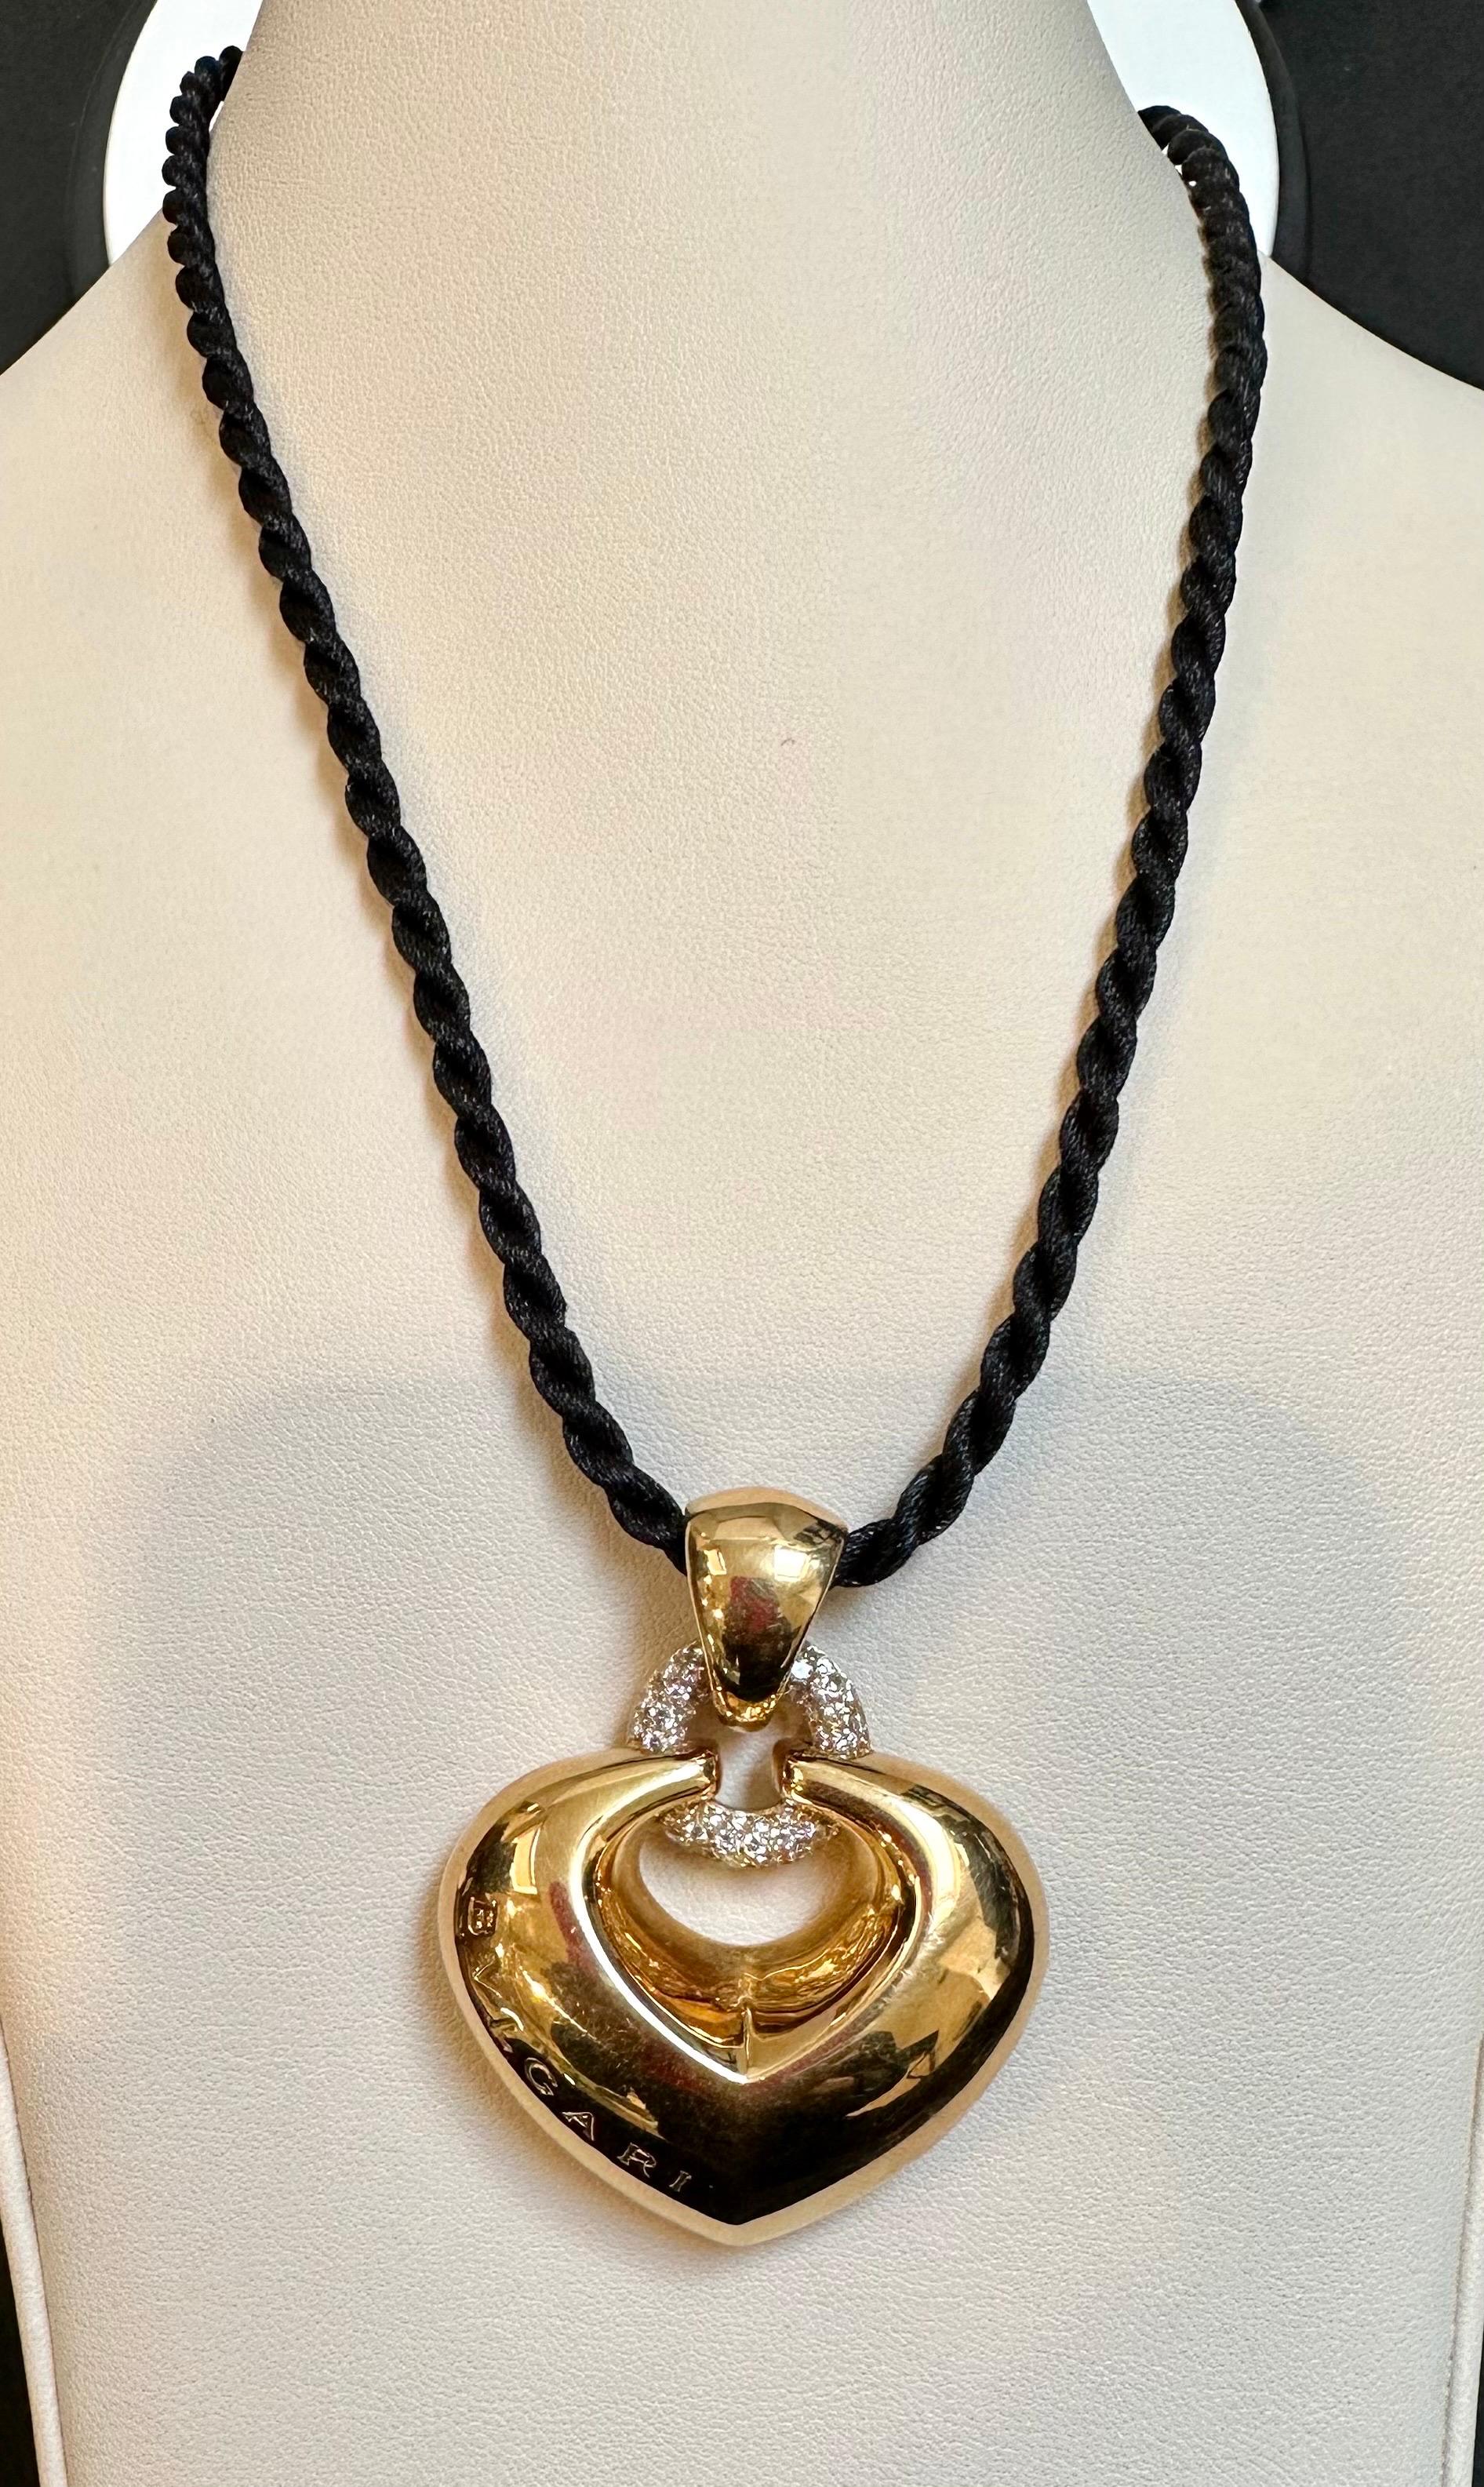 Bulgari 'Doppio Cuore' Gold and Diamond Puffed Heart Pendant on the Leather Cord 4